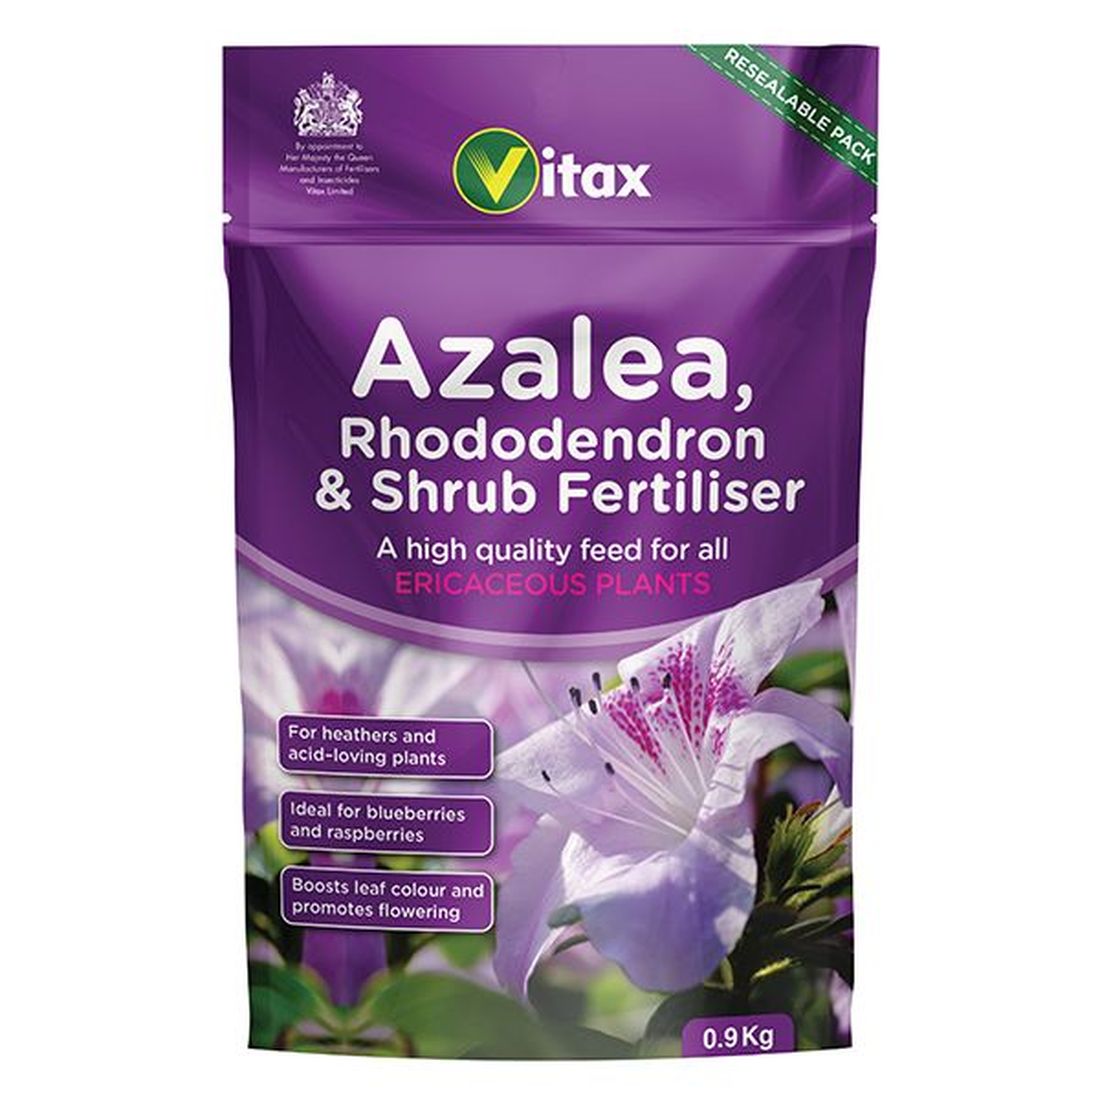 Vitax Azalea, Rhododendron & Shrub Fertilizer 0.9kg Pouch                             